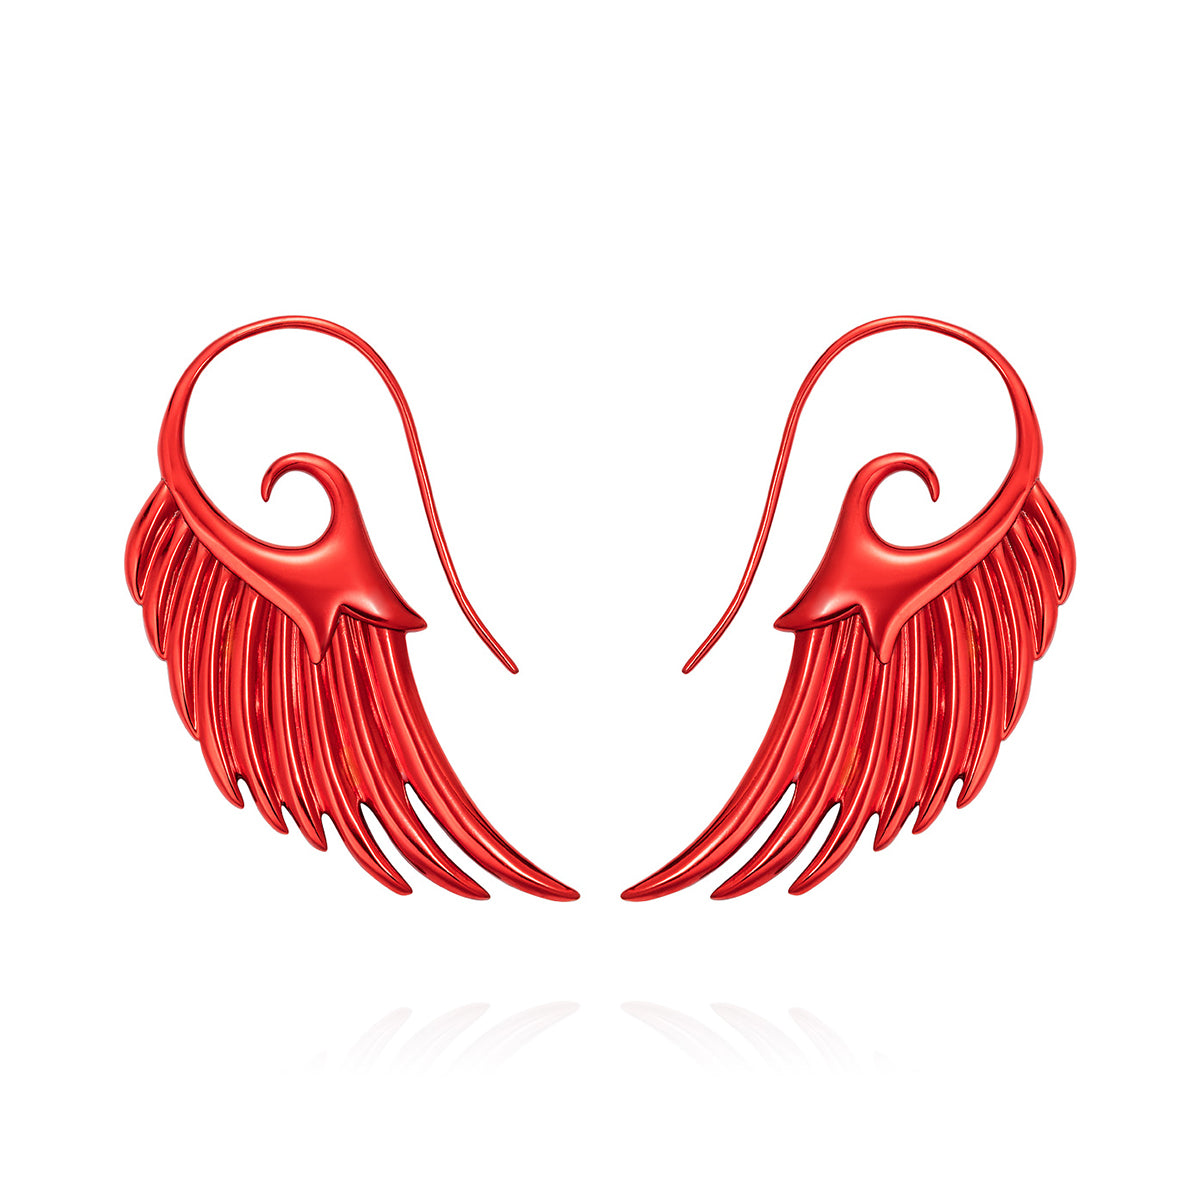 Noor Fares 925 Sterling Silver E-Coated Red Wings Earrings 